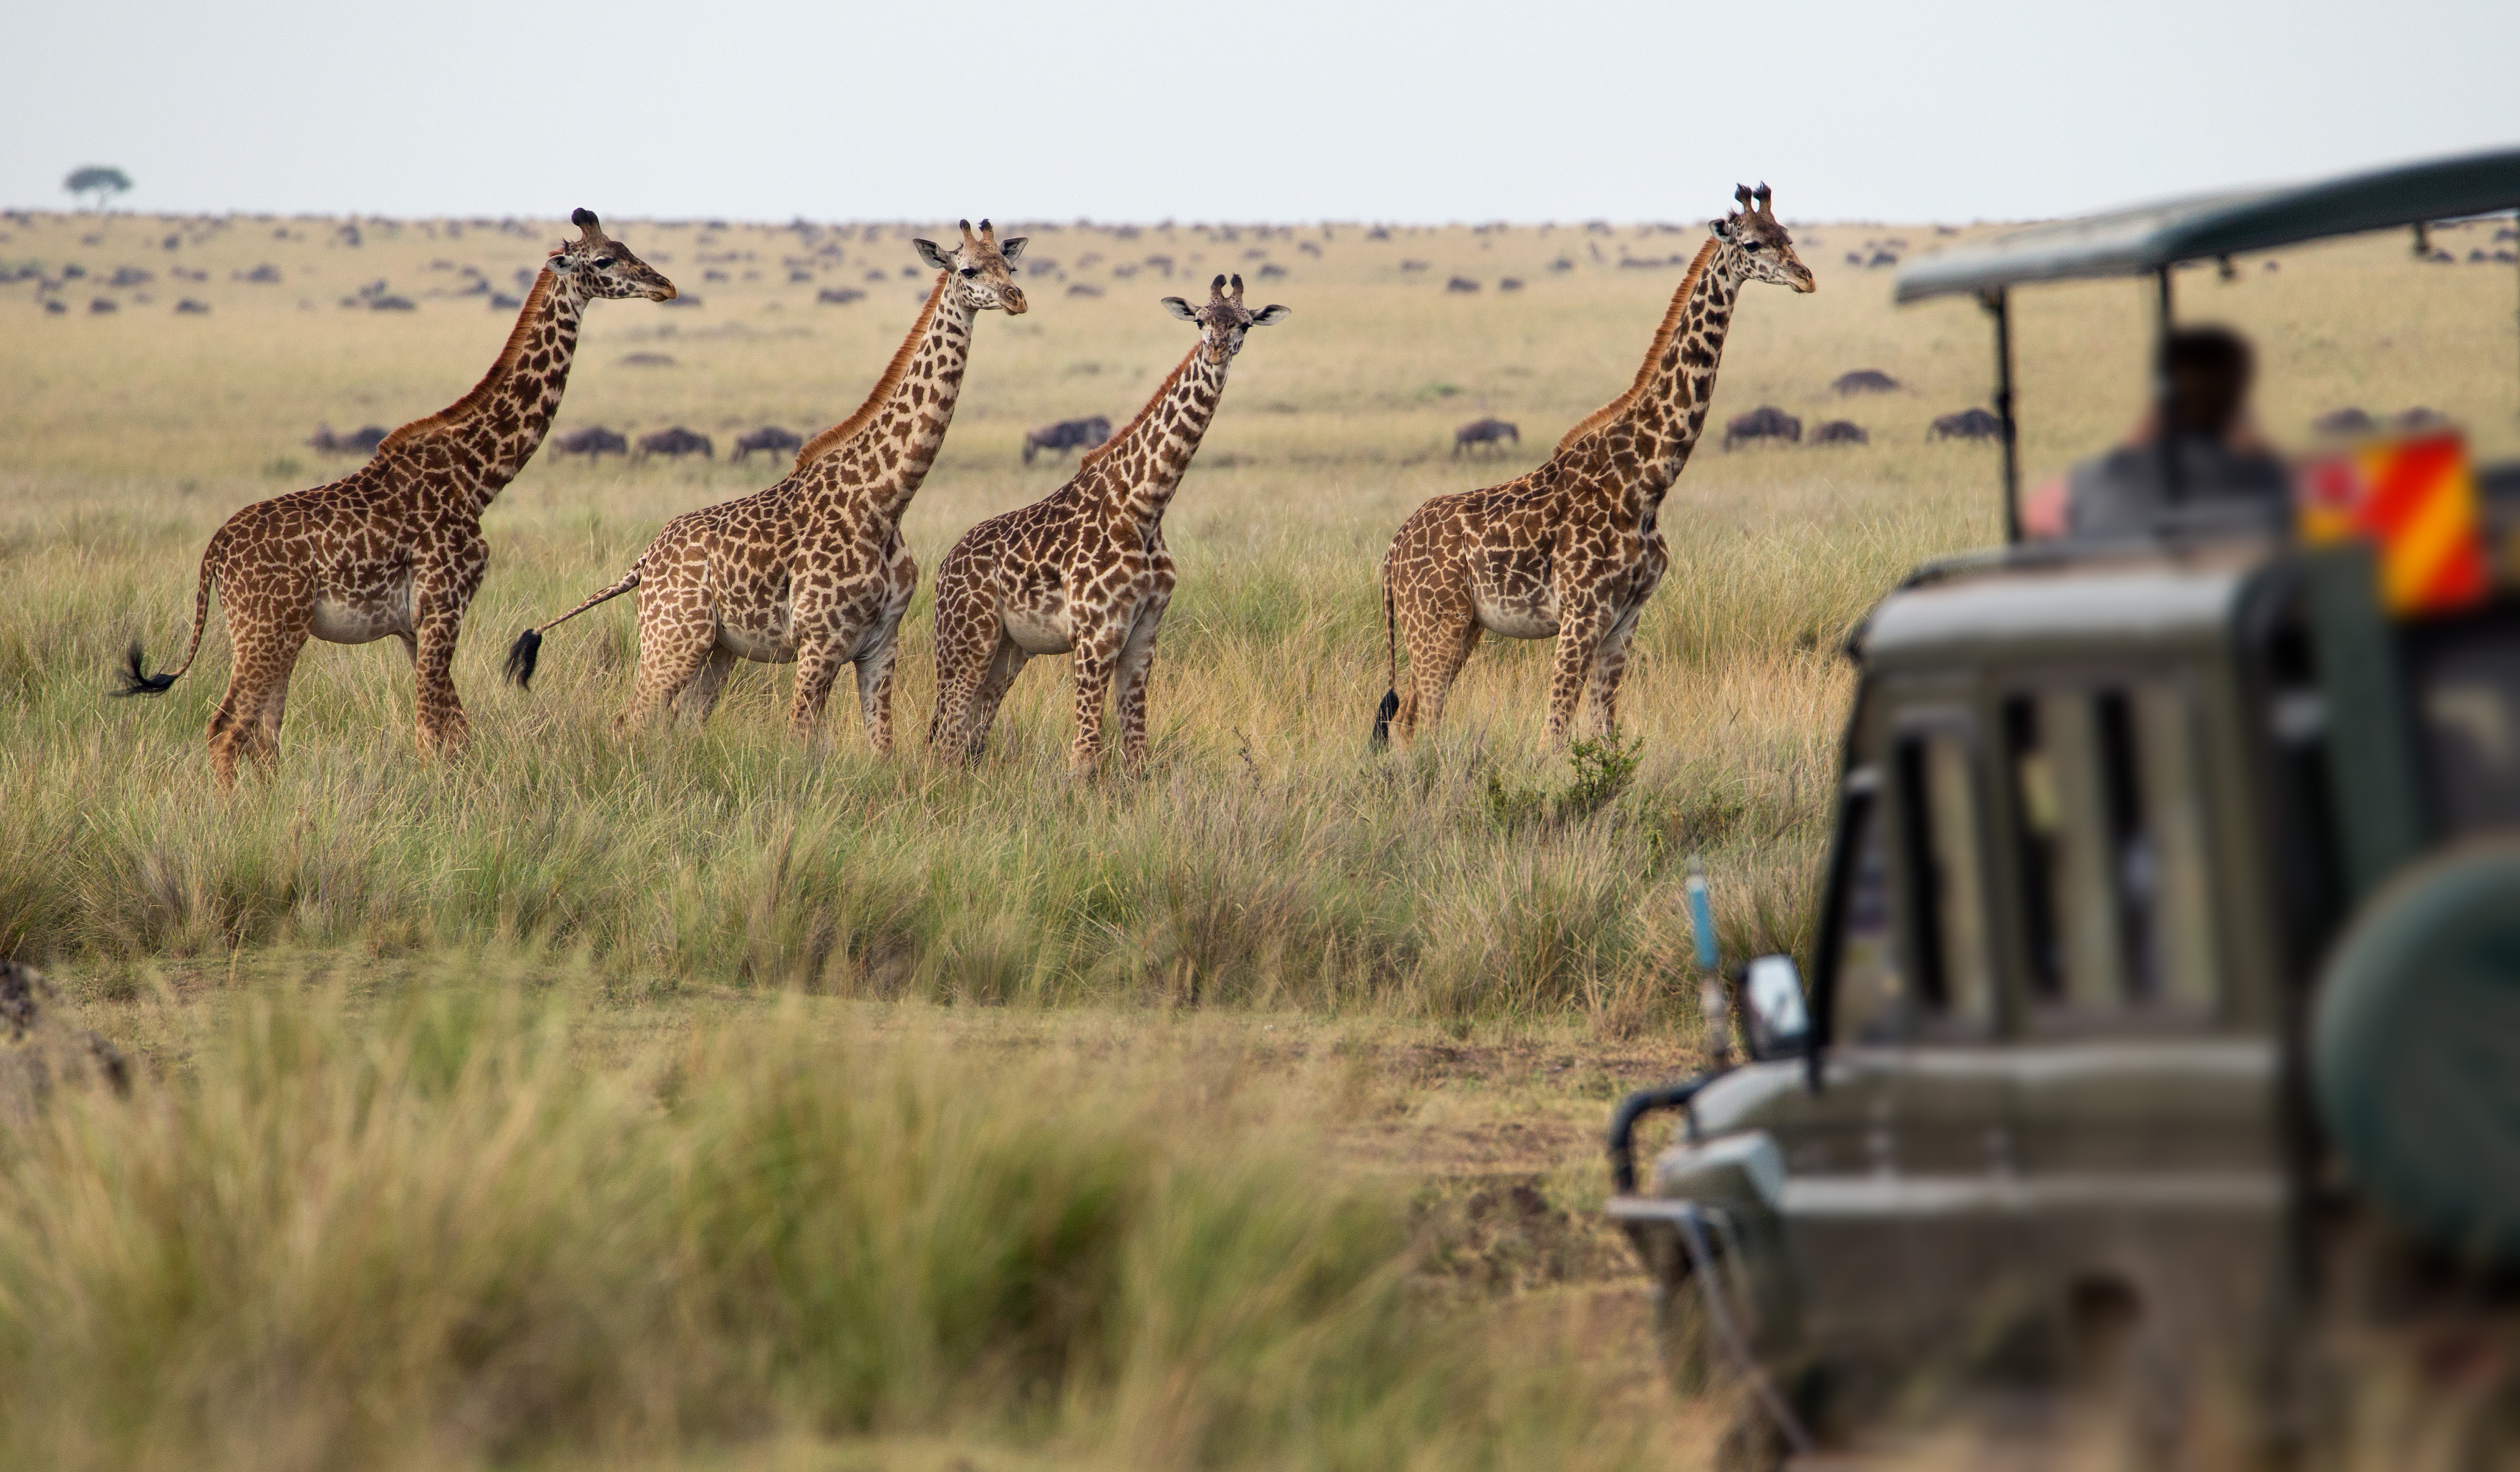 Giraffes standing on the African savannah